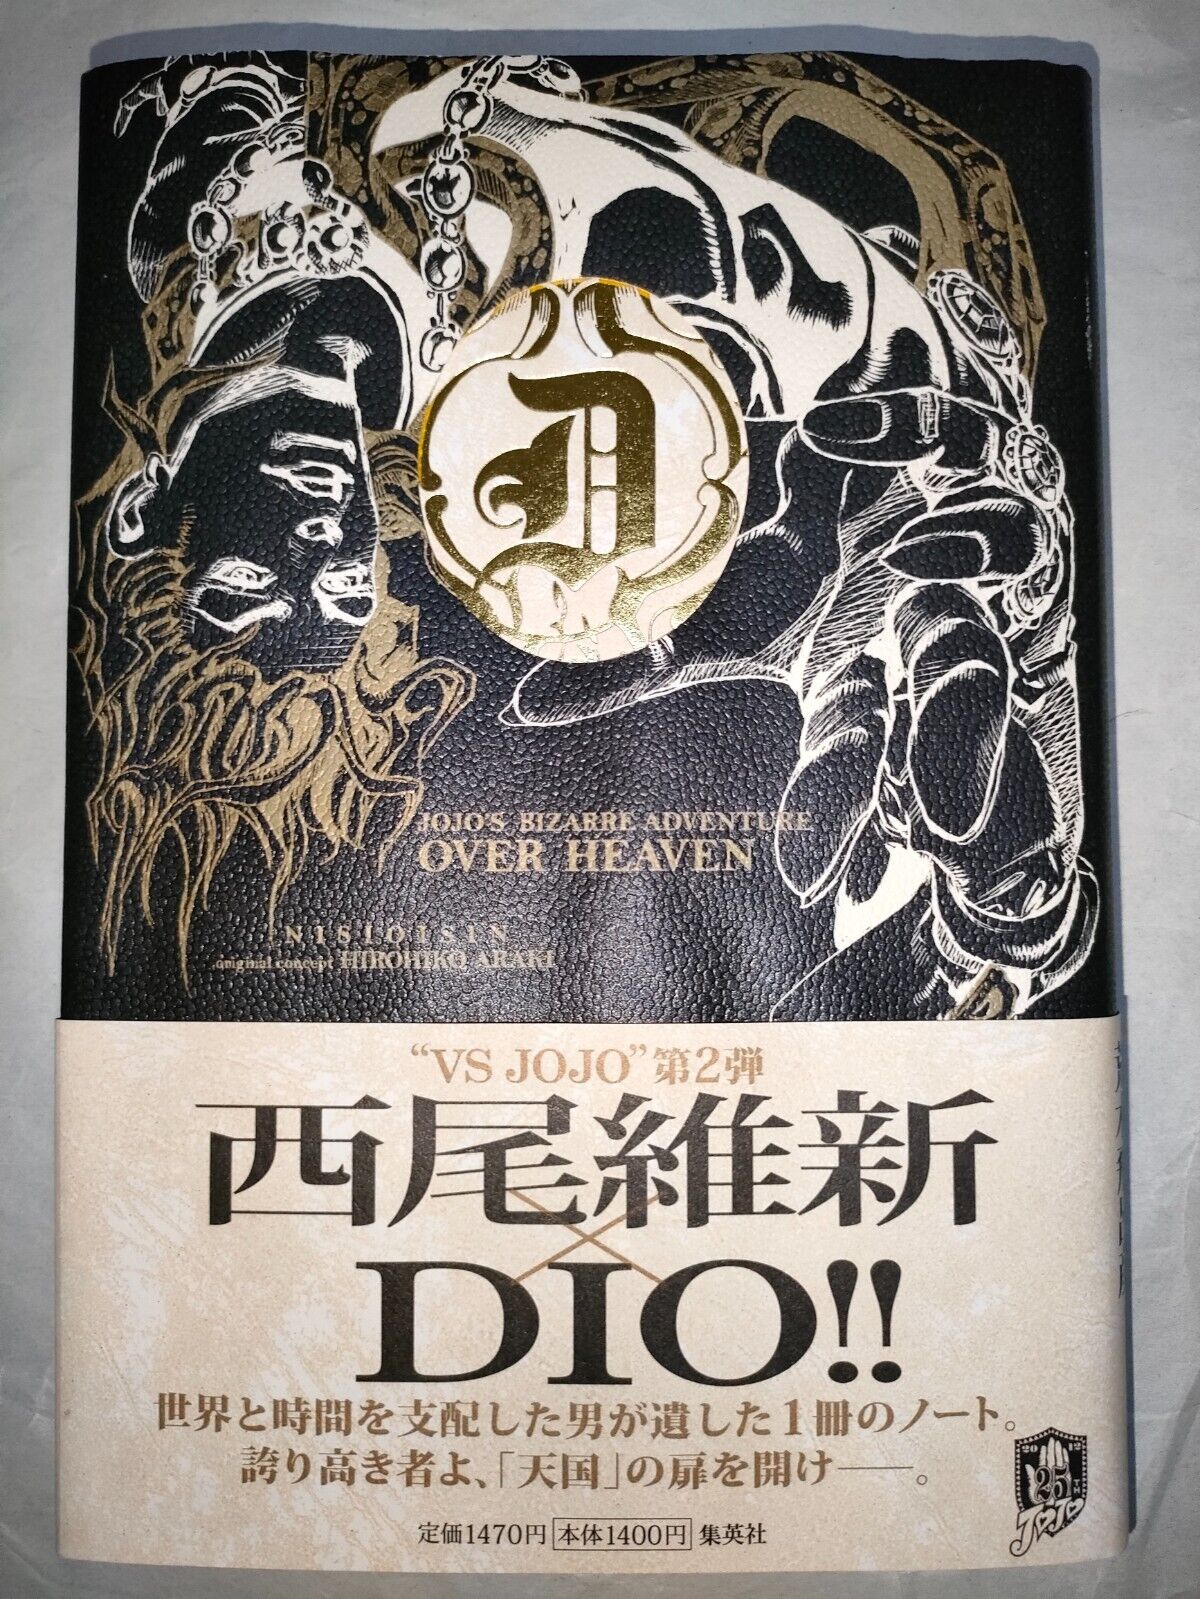 Jojo's Bizarre Adventure novel OVER HEAVEN Nisio Isin x DUO 1st edi. w/tracking